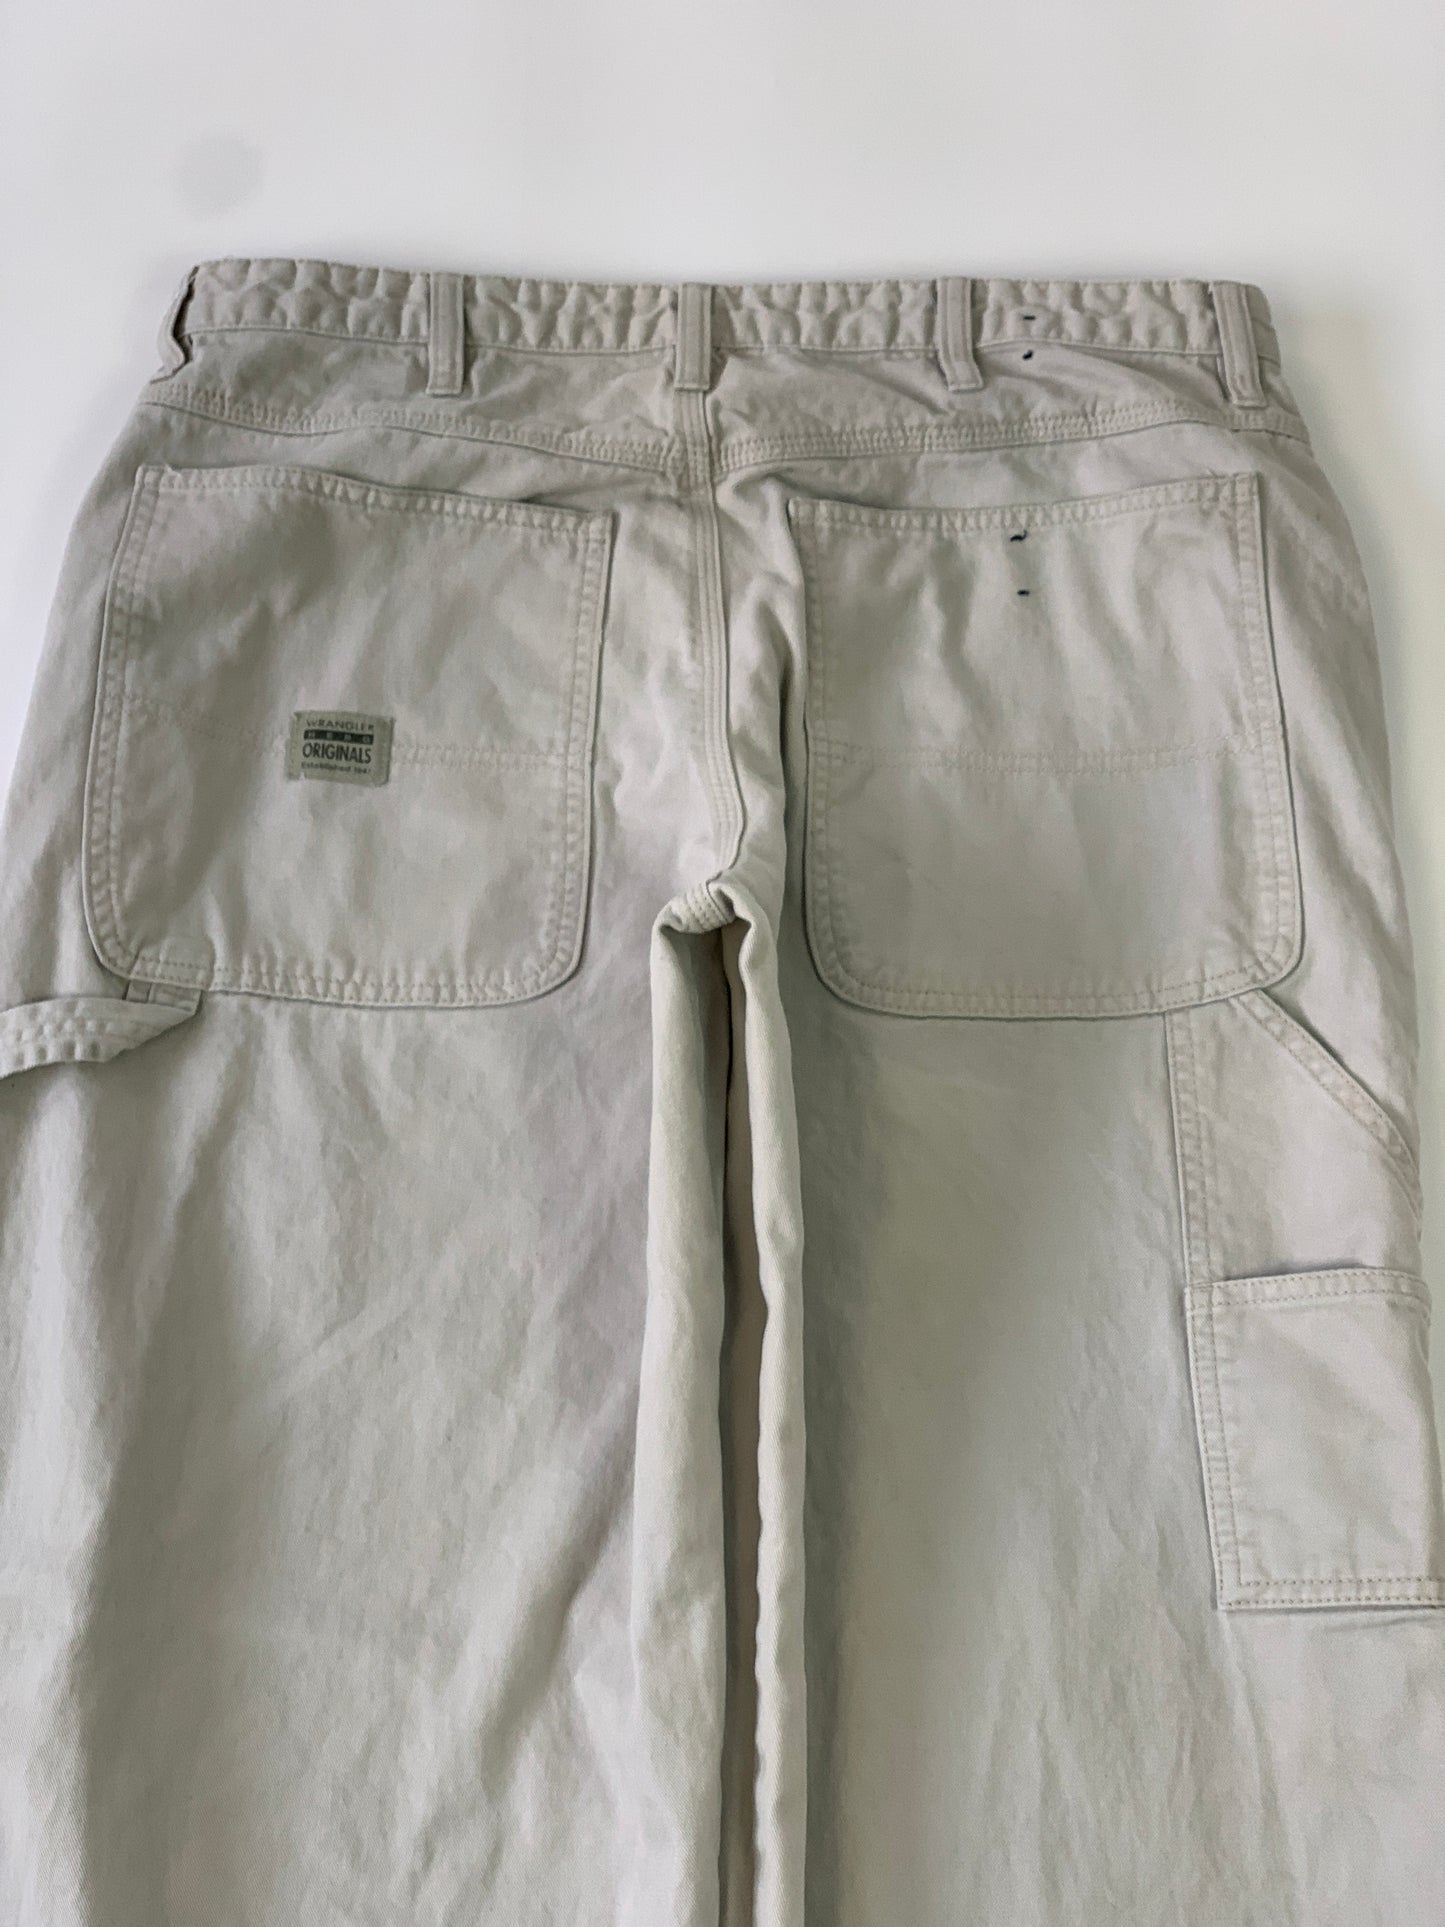 Wrangler Carpenter Vintage Jeans - 34 x 30